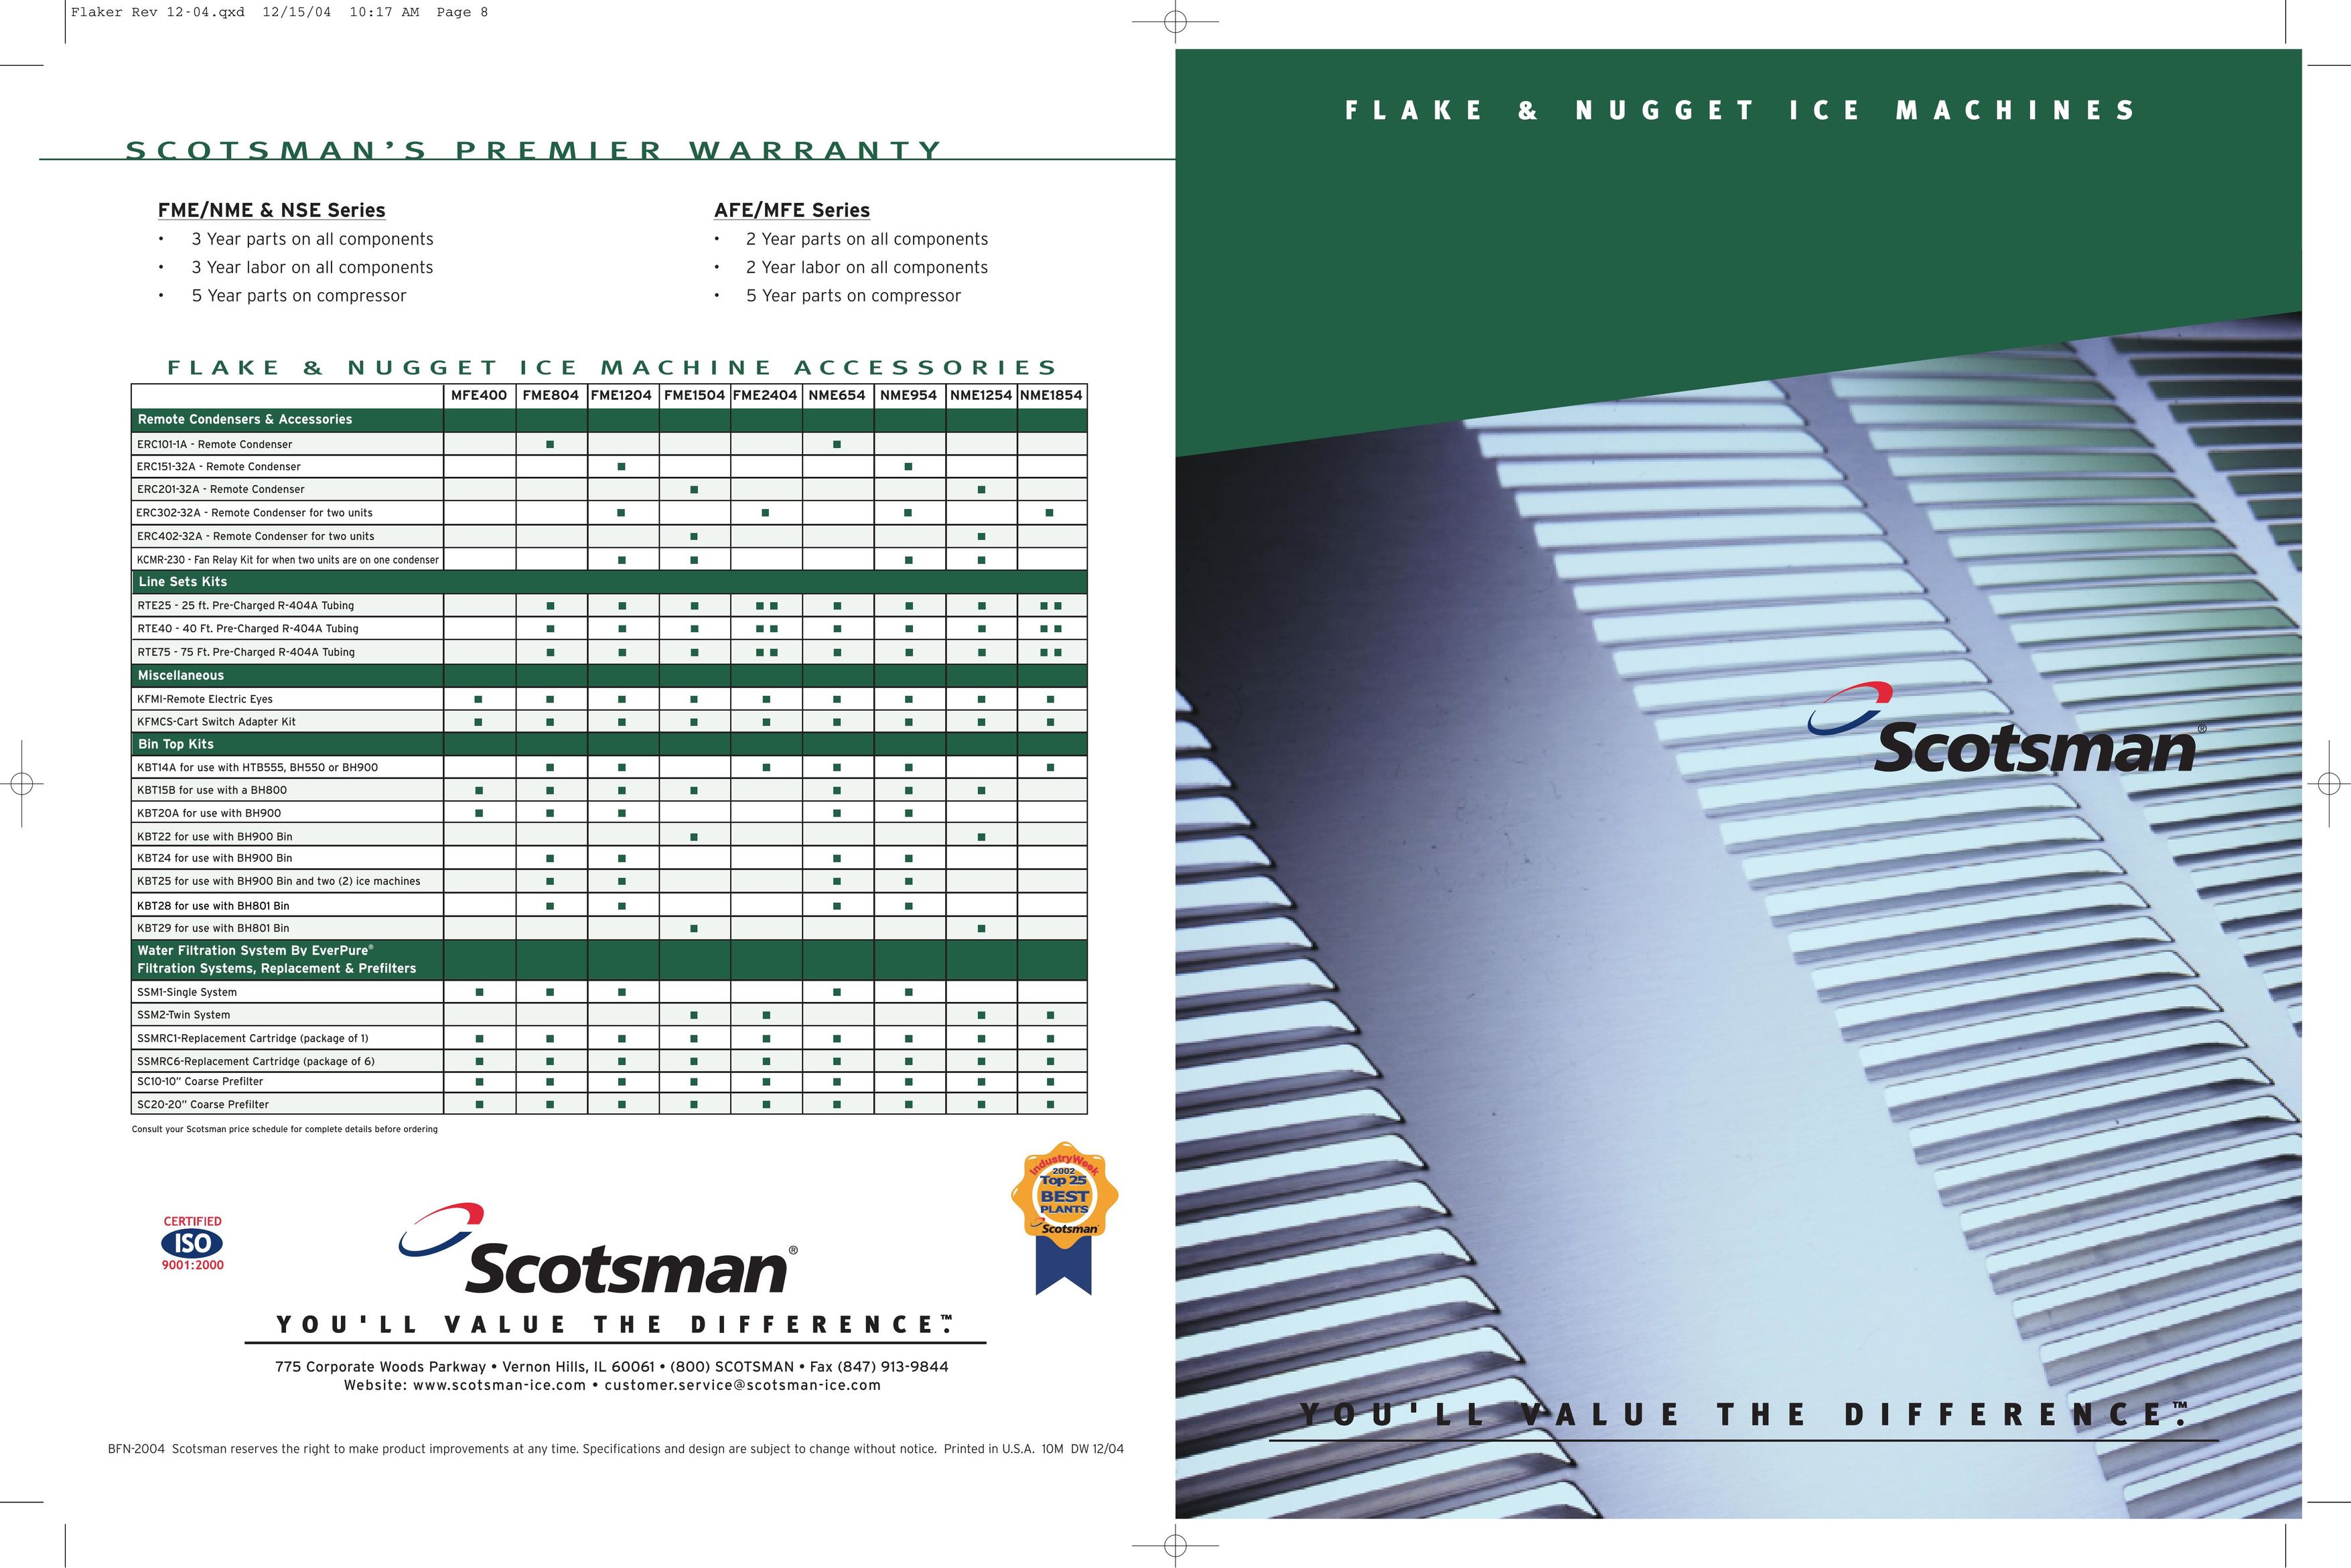 Scotsman Ice FME1504 Ice Maker User Manual